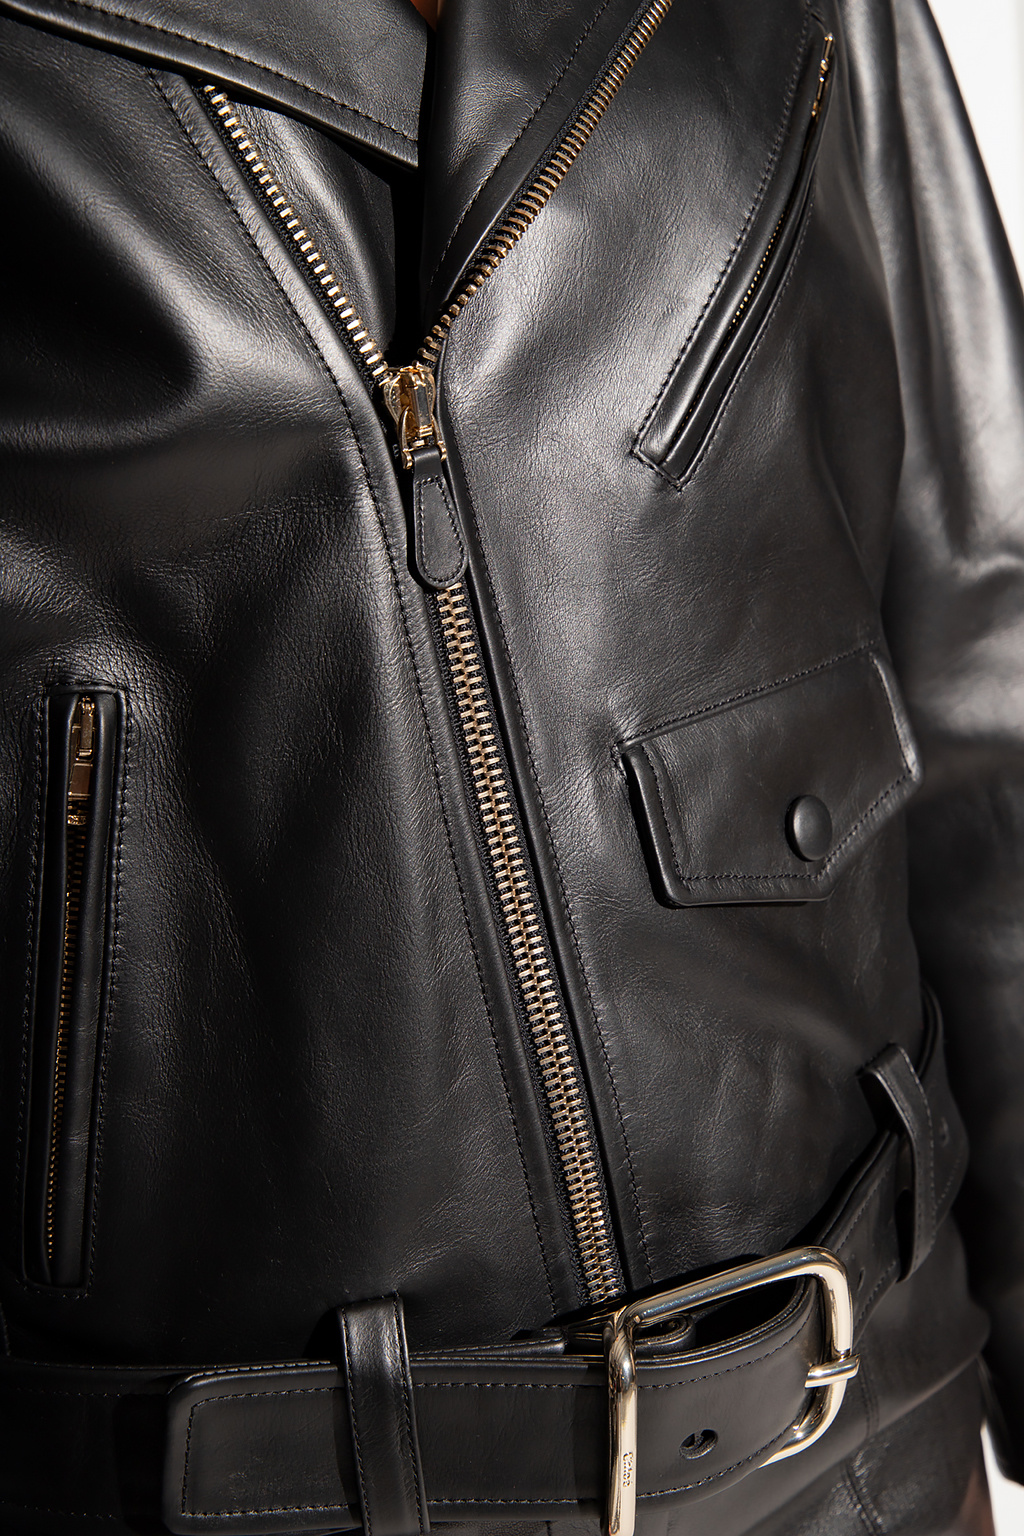 Chloé Leather biker jacket